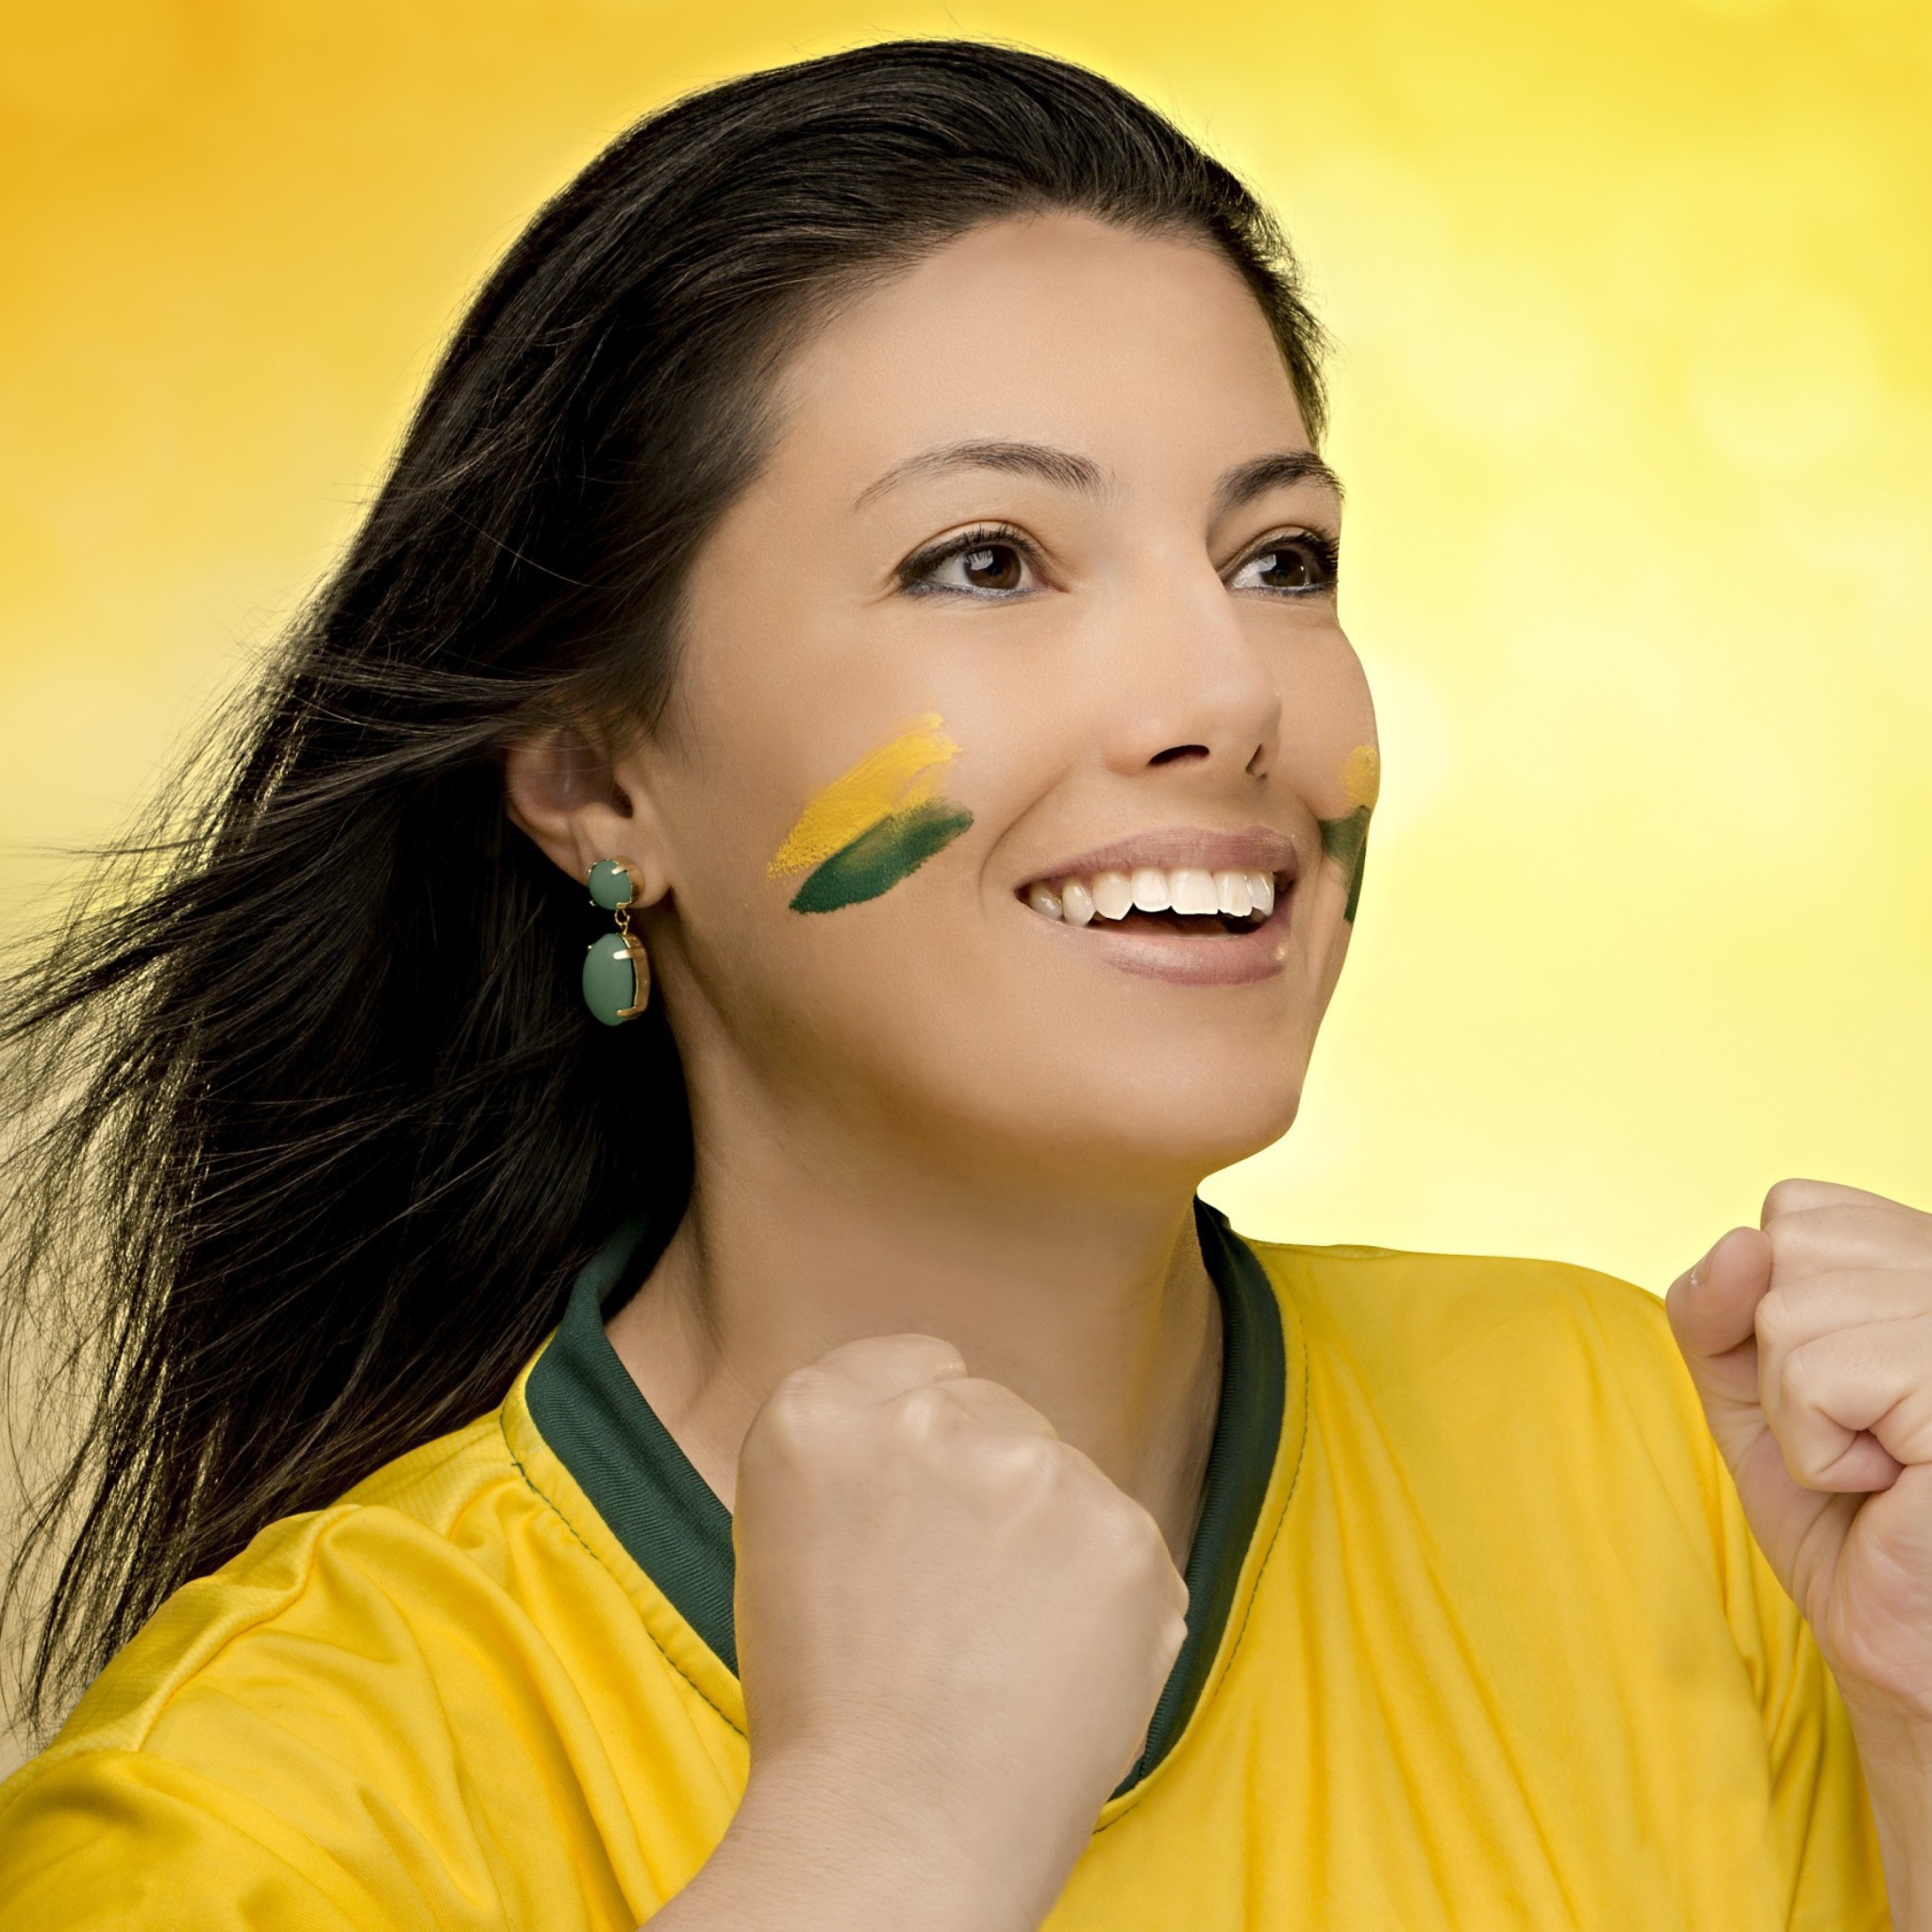 Brazil FIFA Football Cheerleader wallpaper 2048x2048